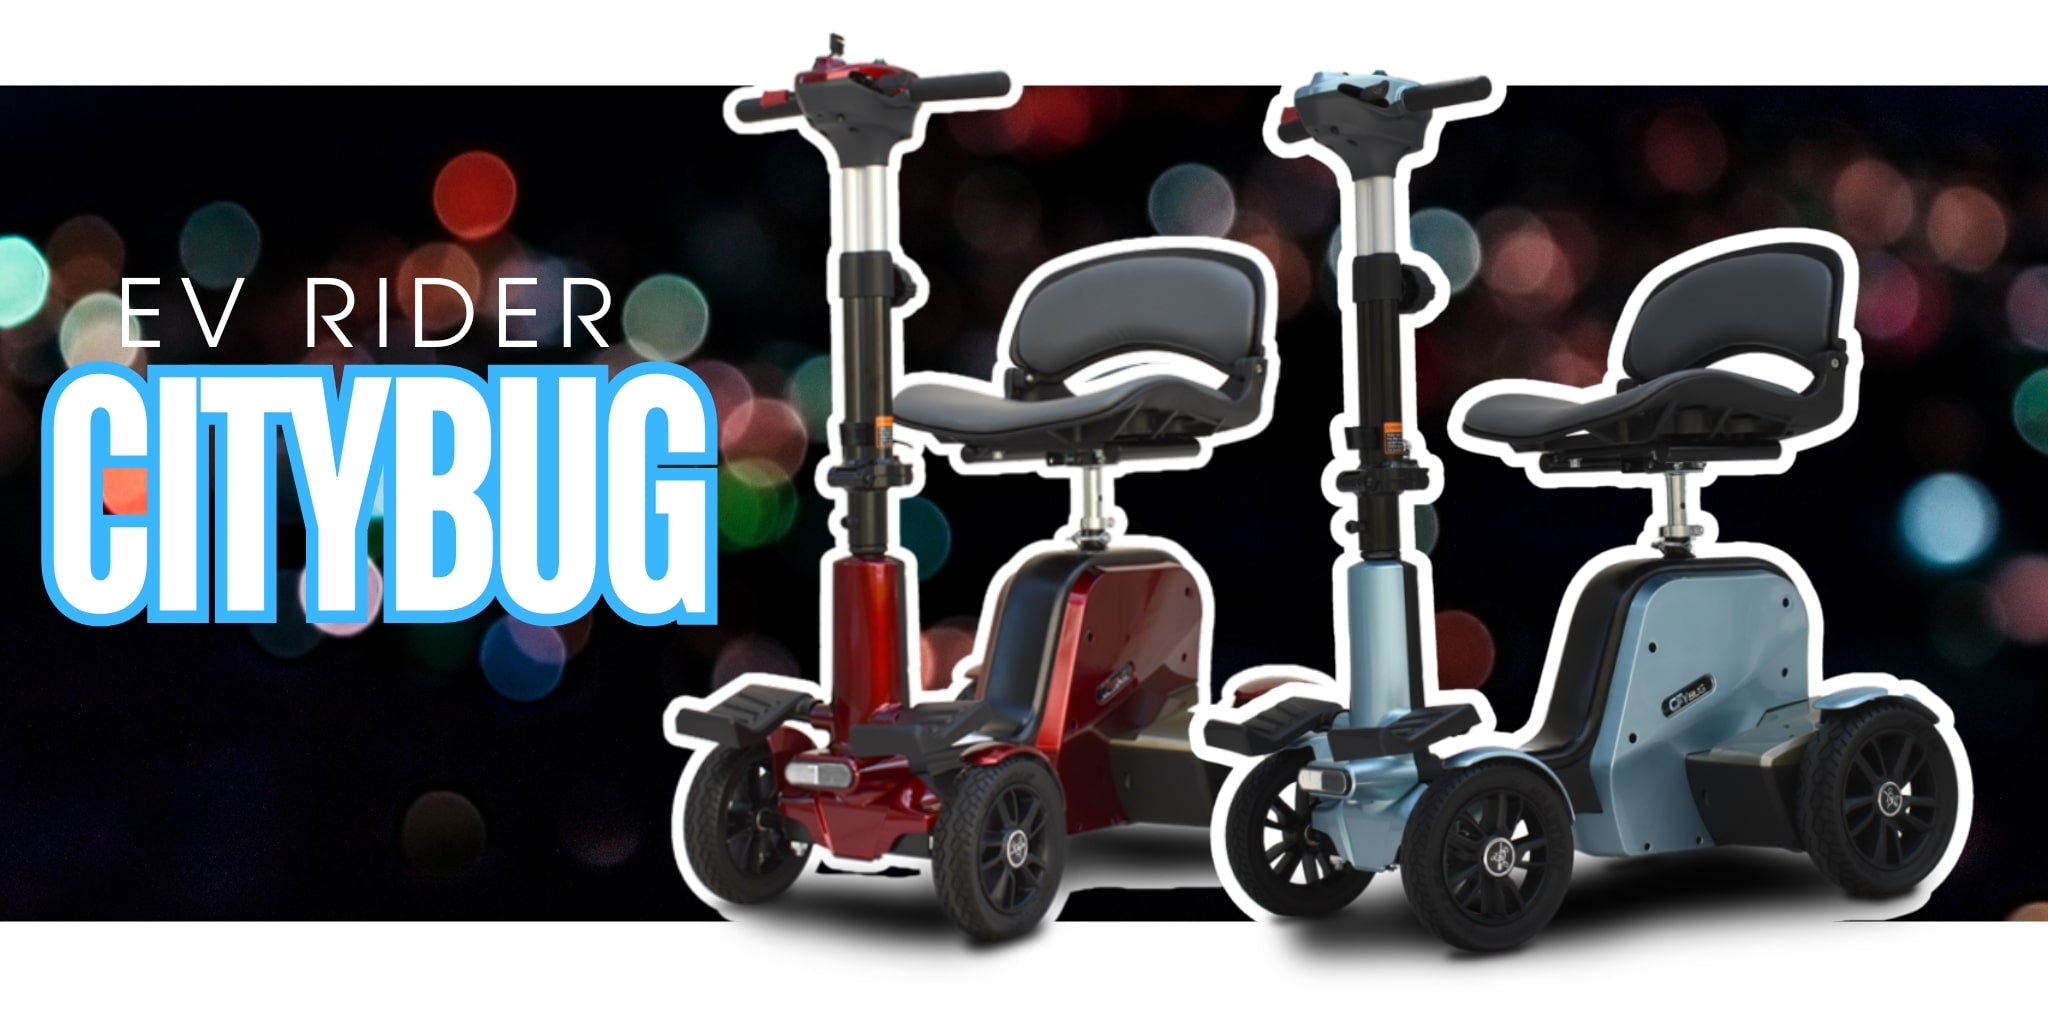 ev rider citybug mobility scooter